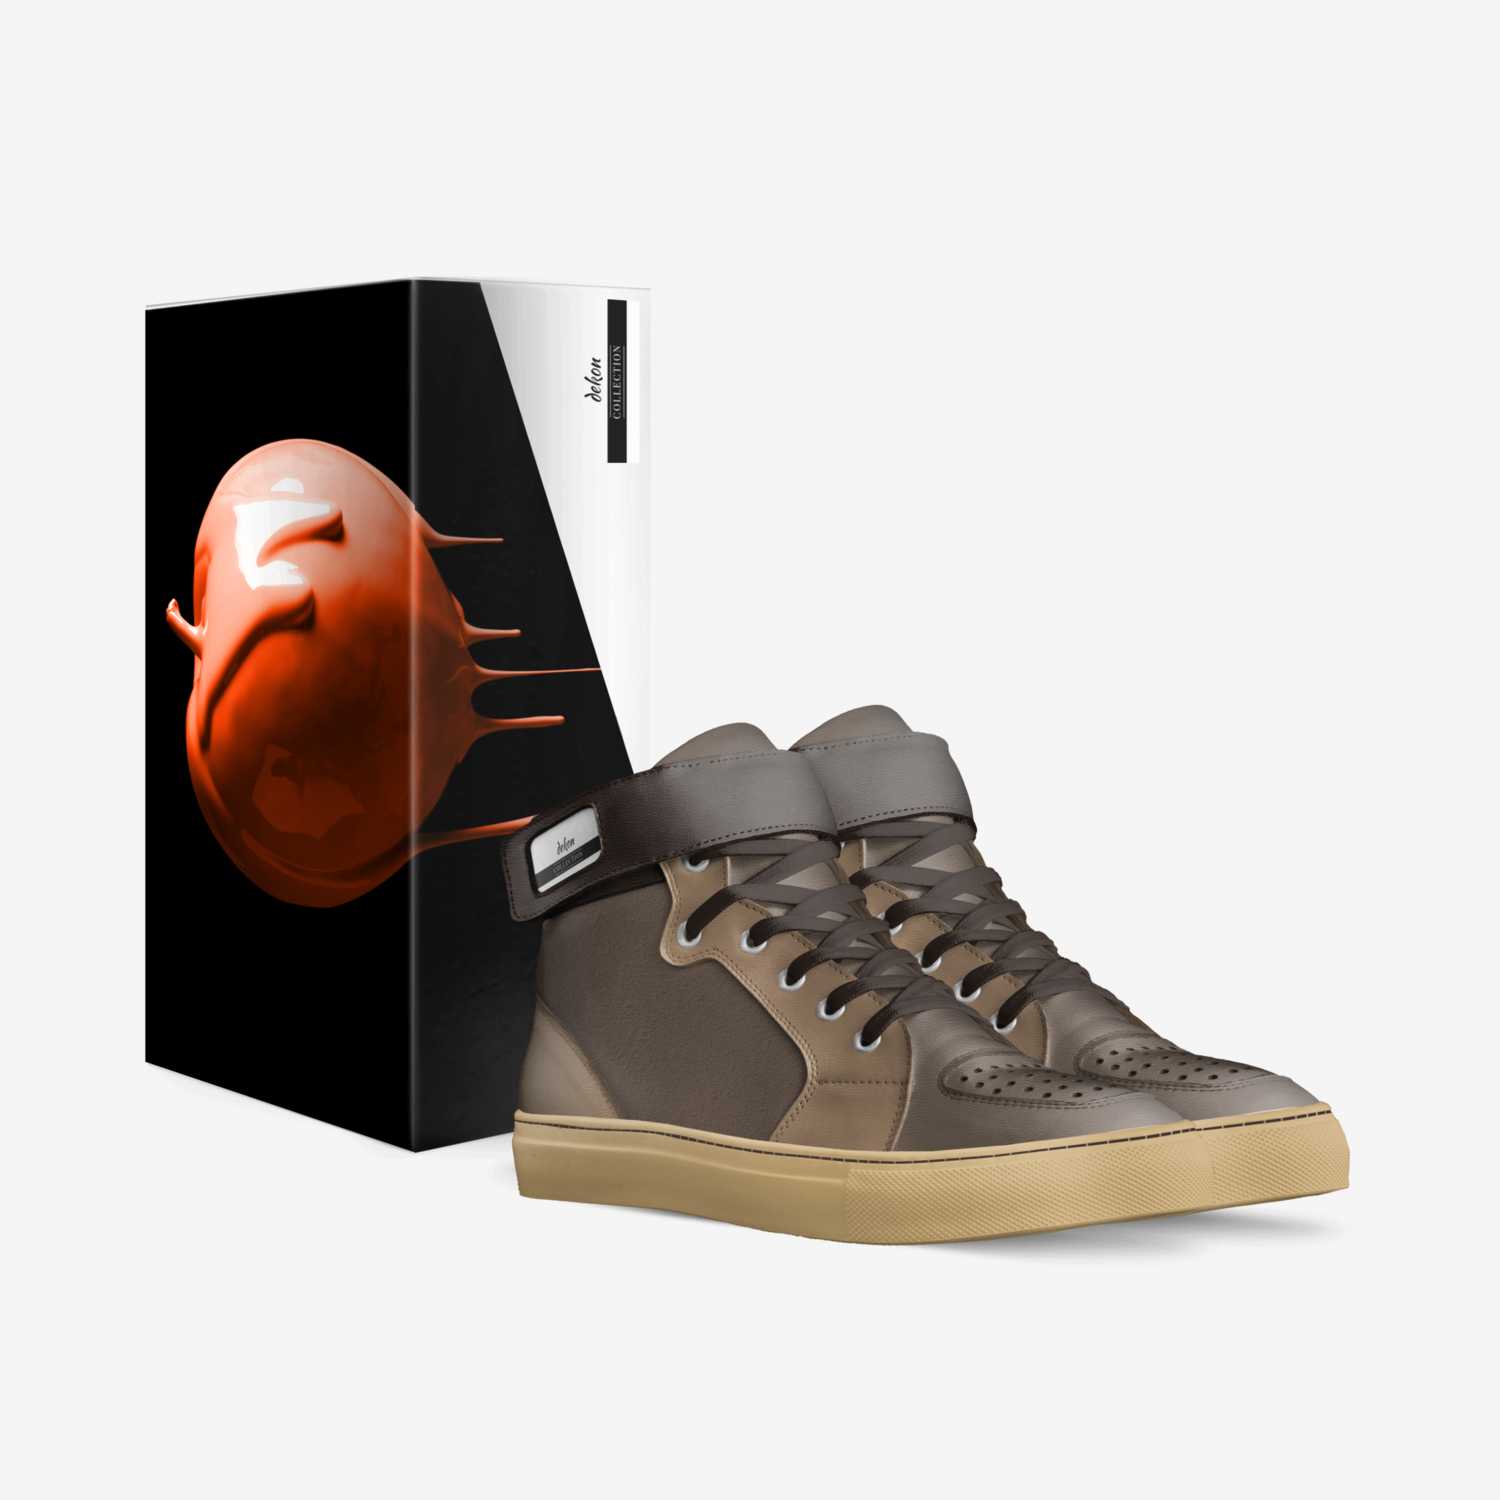 dekon custom made in Italy shoes by Idris Santi | Box view